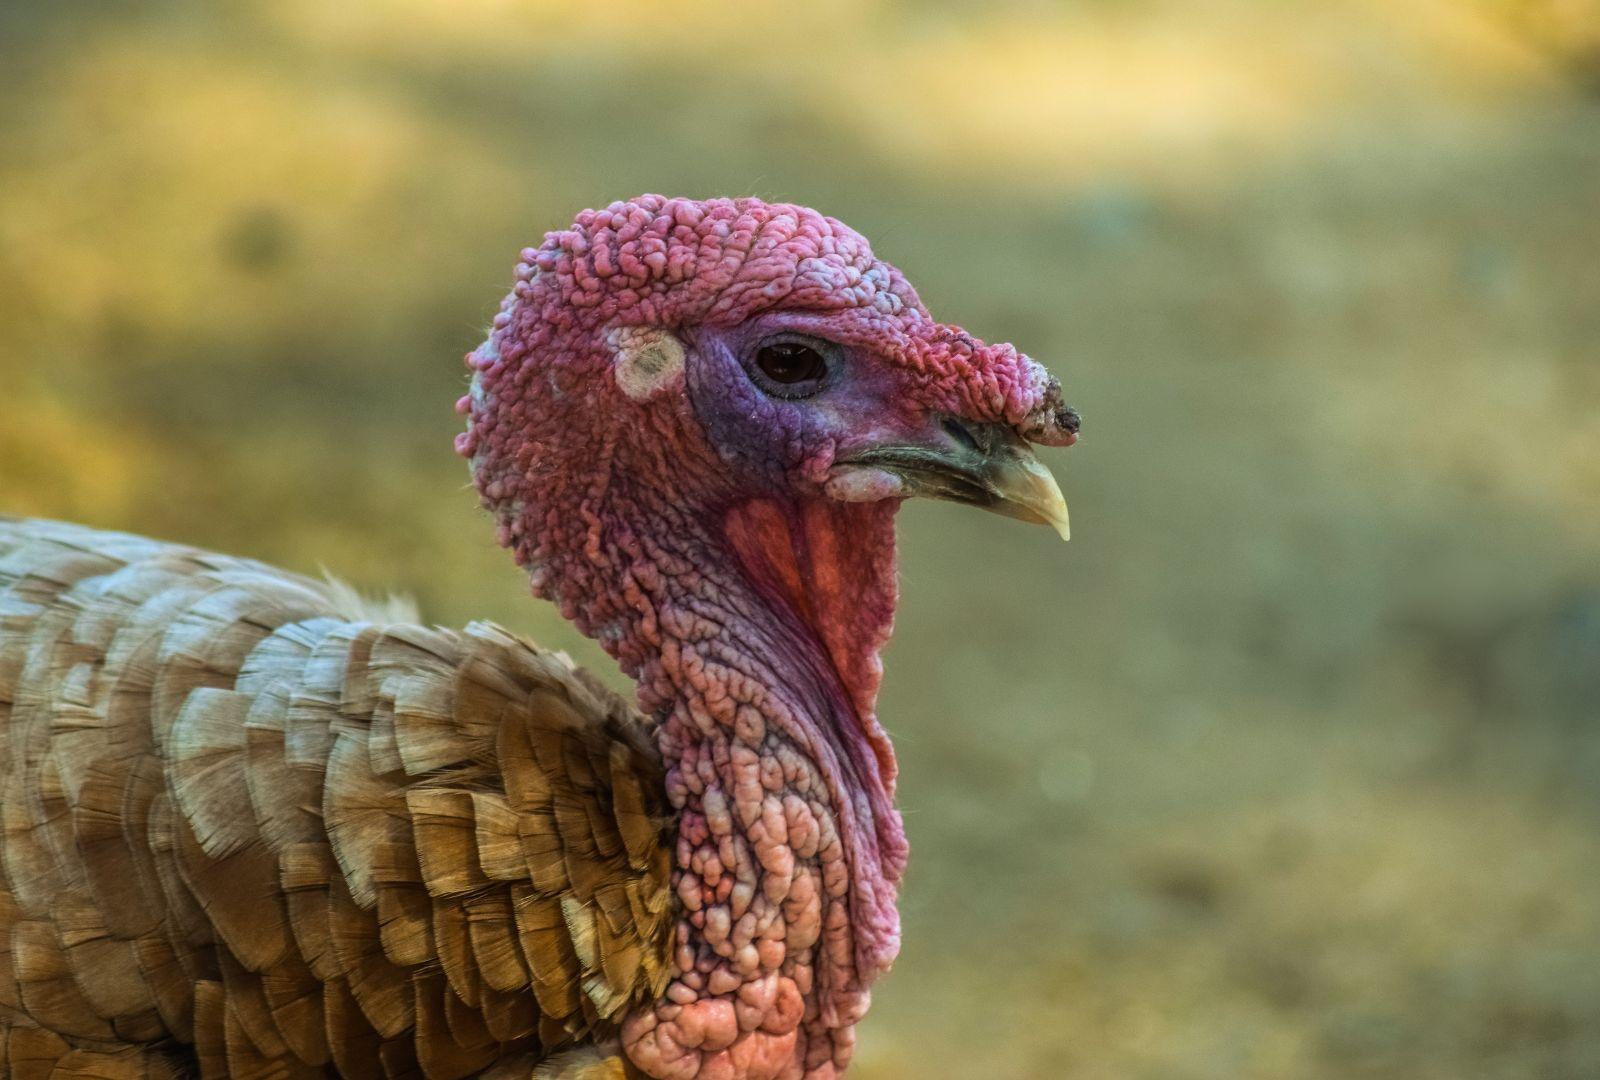 Flock Of Turkeys Test Ride New Good Gravy Coaster At Holiday World Theme Park